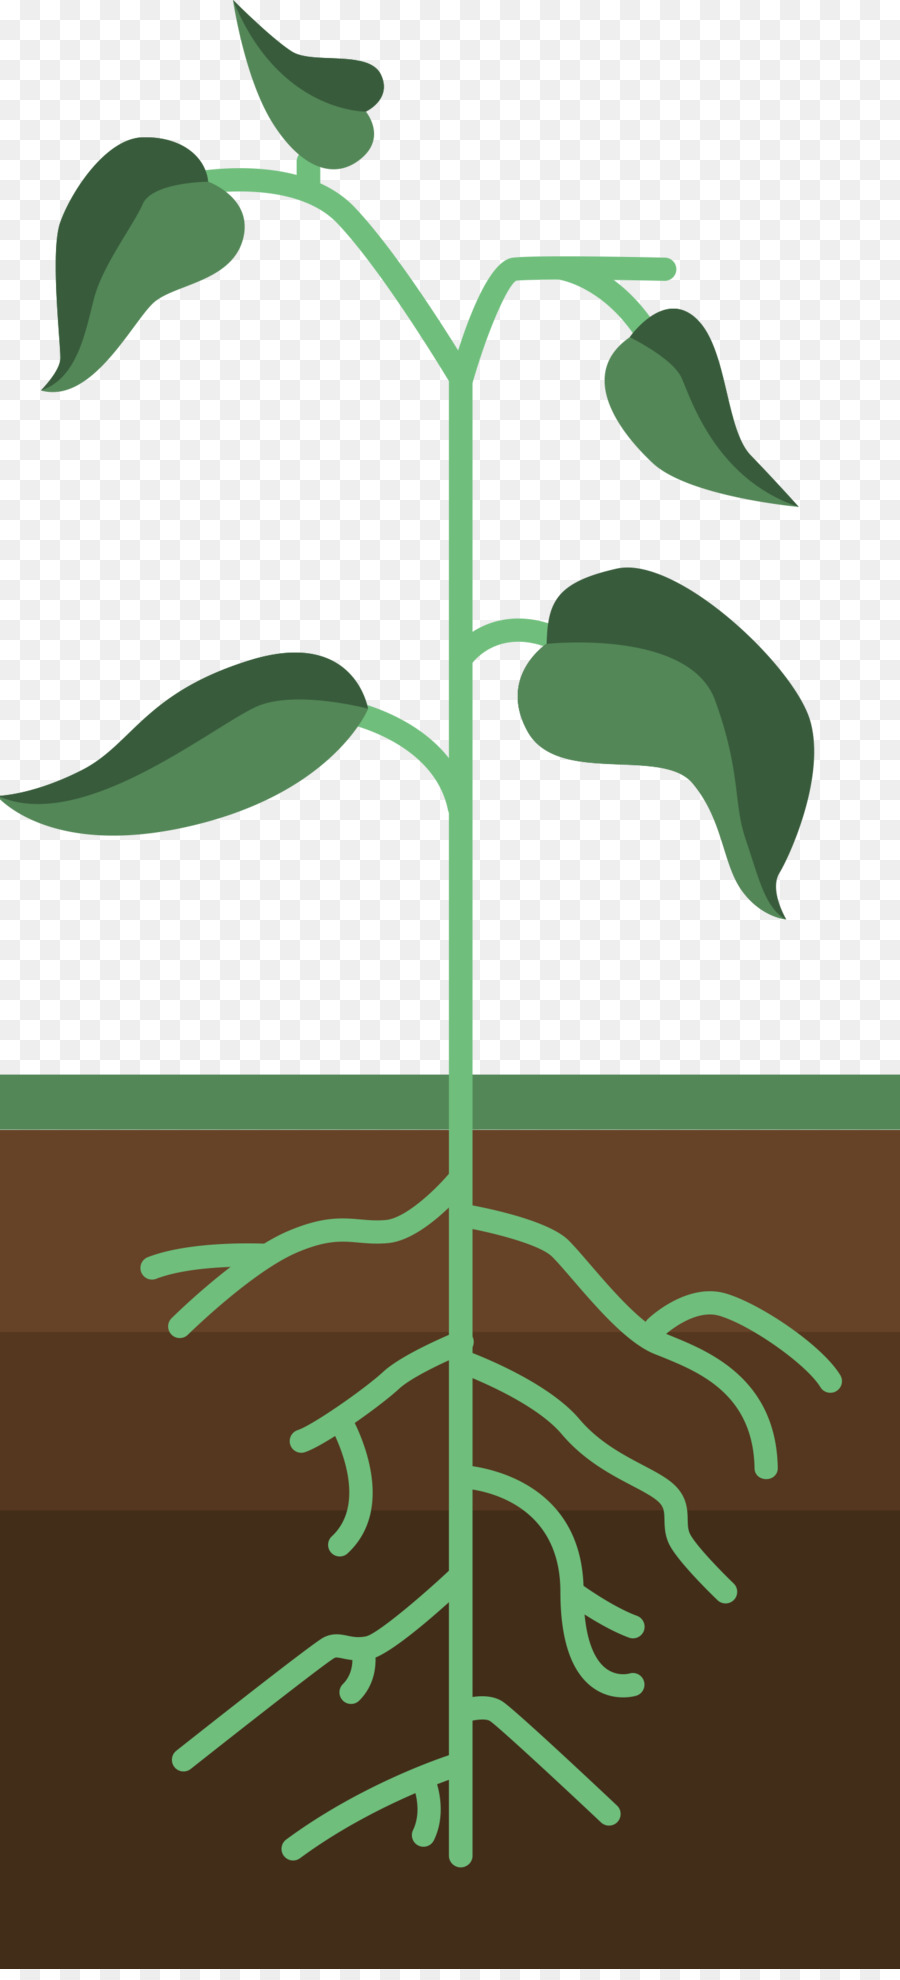 Keimung Download Clip art - Pflanzenwachstum